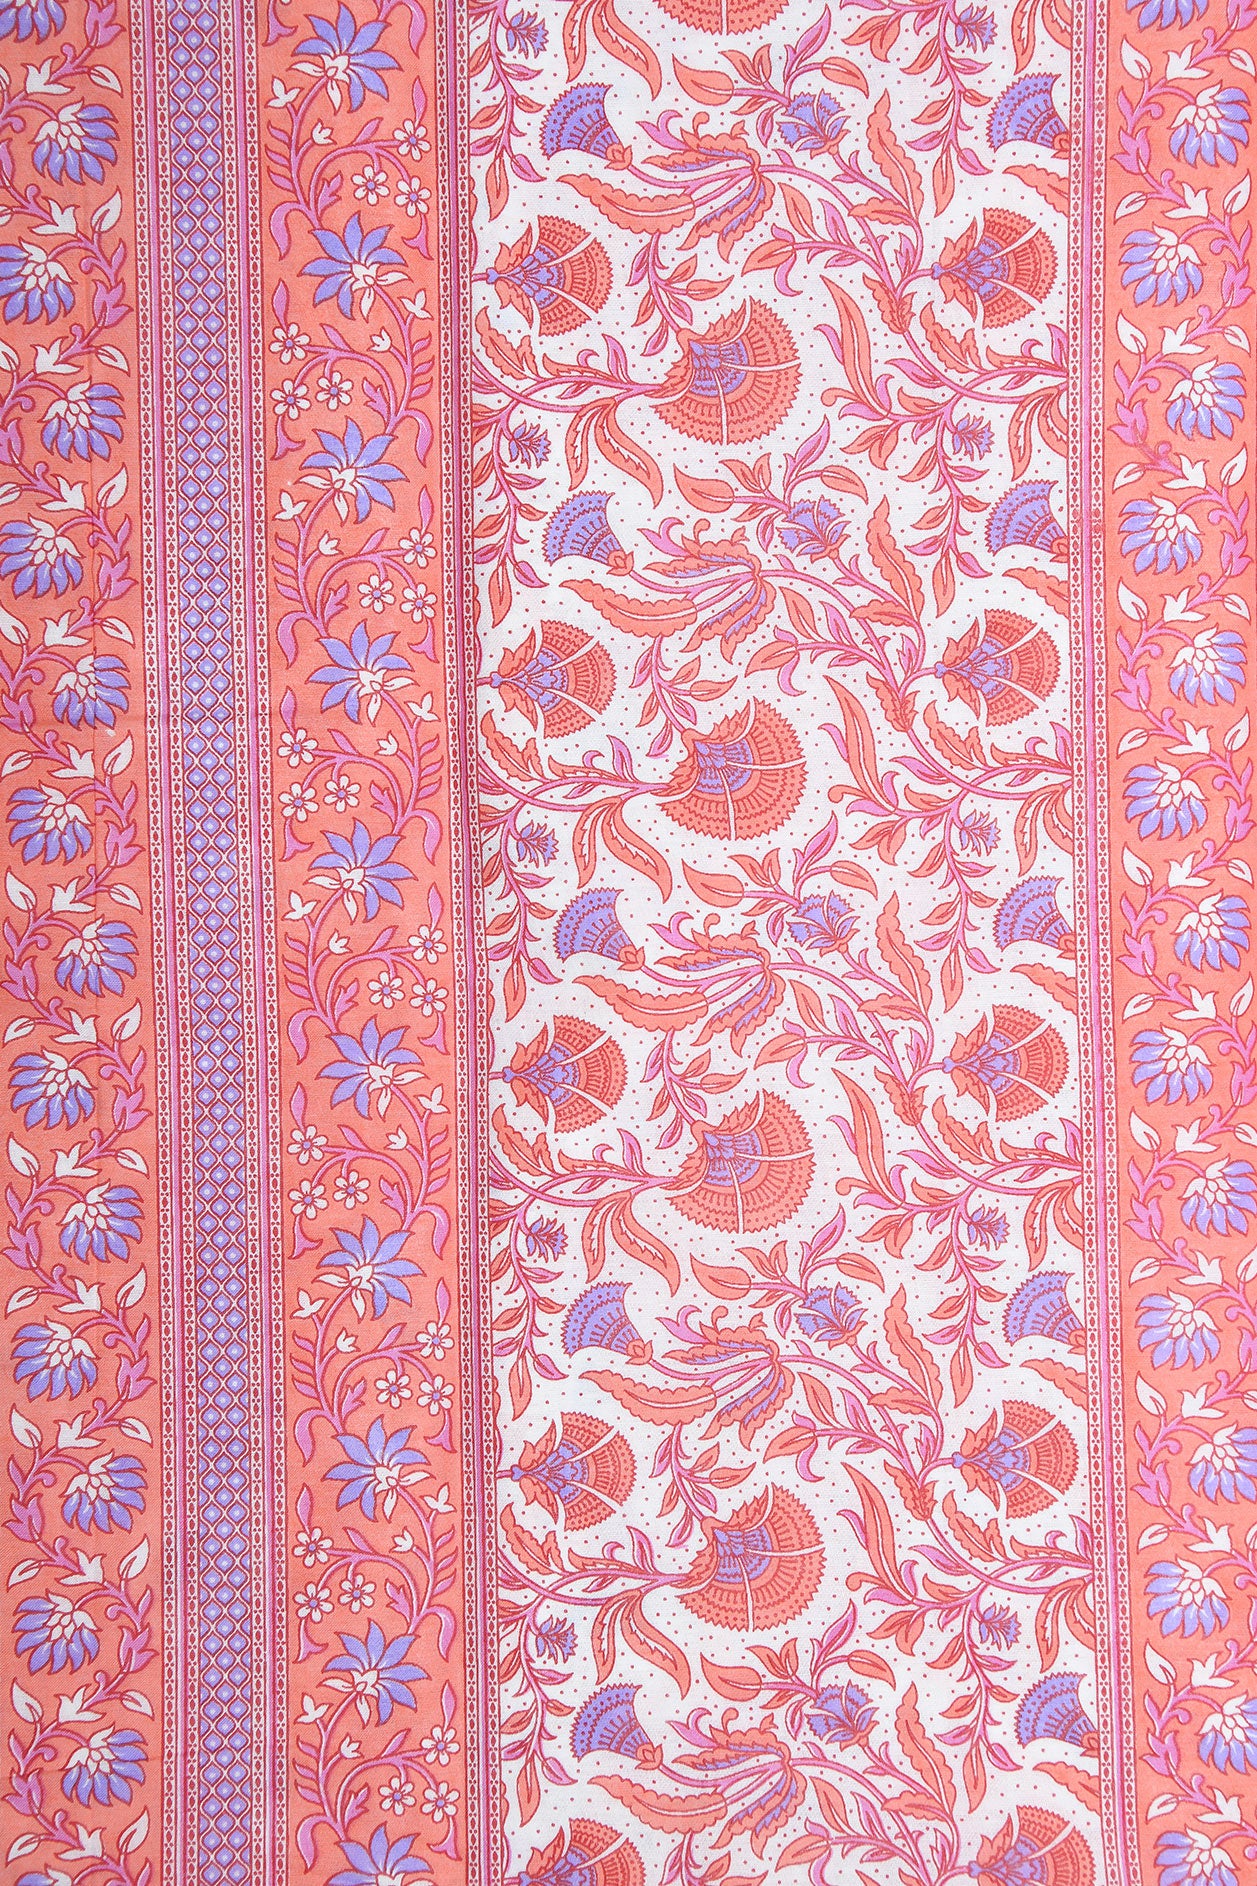 Thread Work Paisley Border With Floral Printed Peach Orange Ahmedabad Cotton Saree